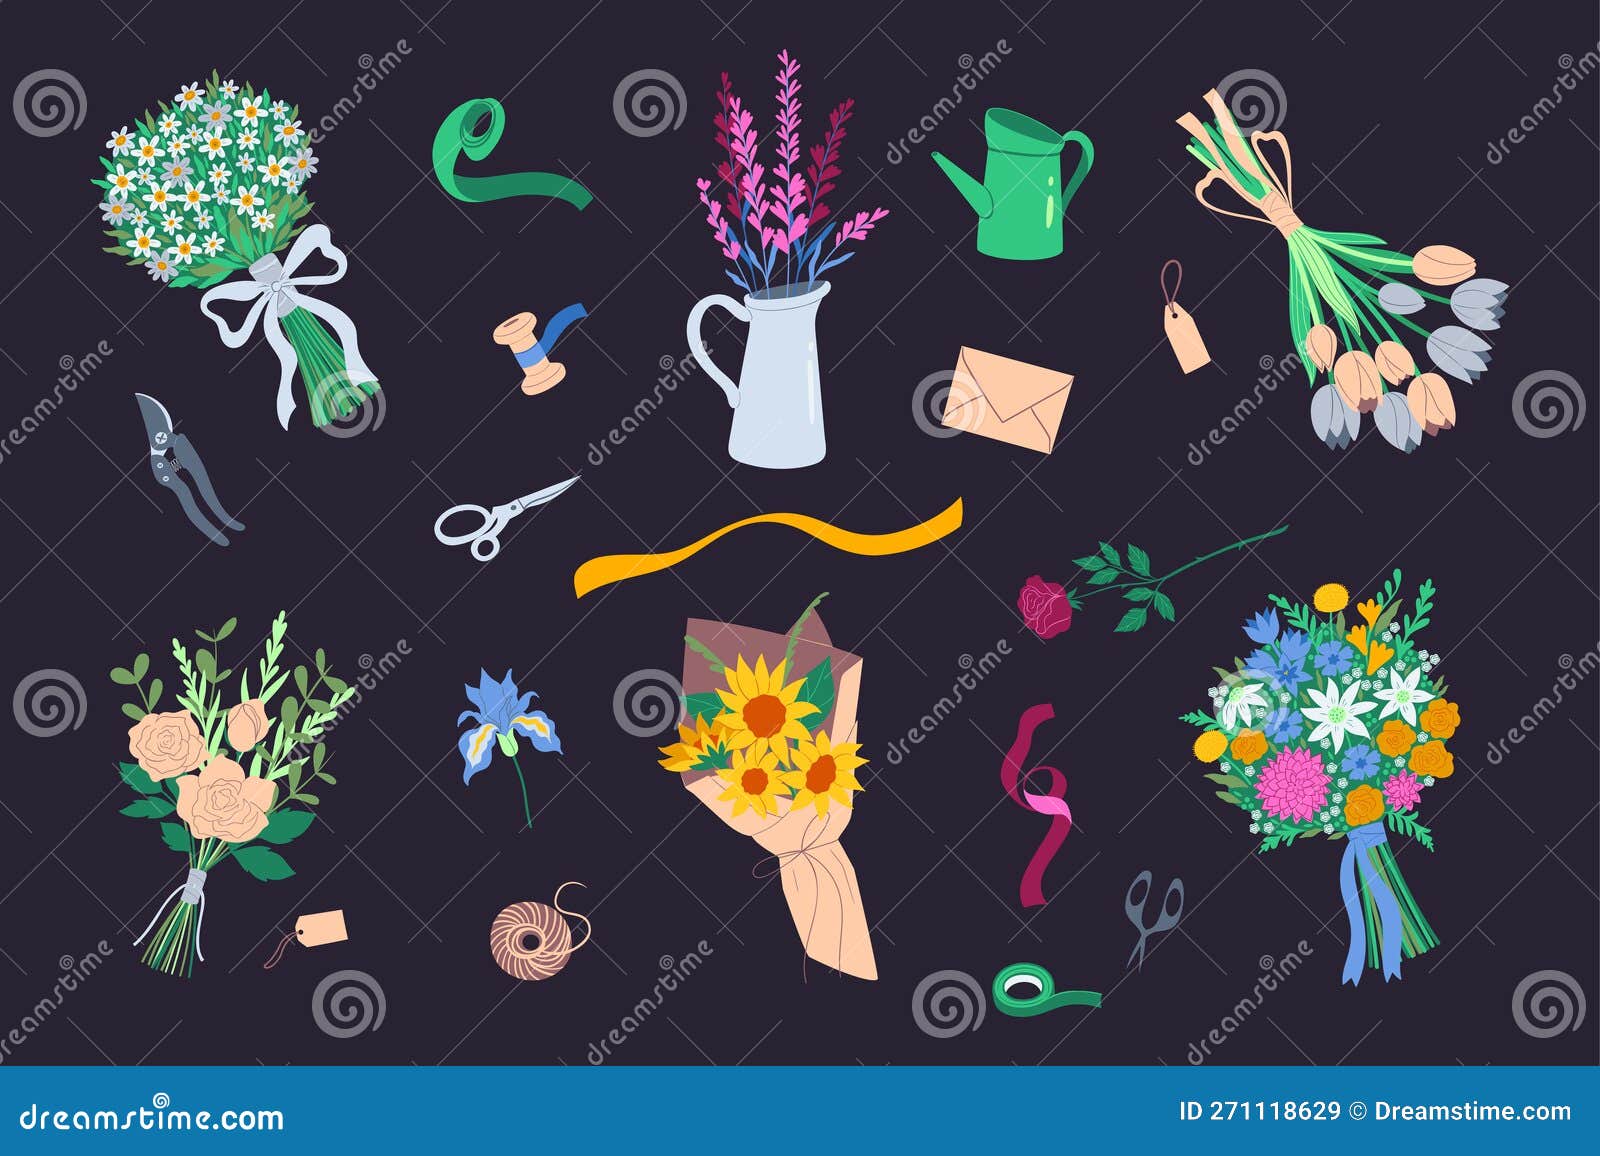 a set of florista tools, scissors, tapes, bouquets, flowers.  graphics